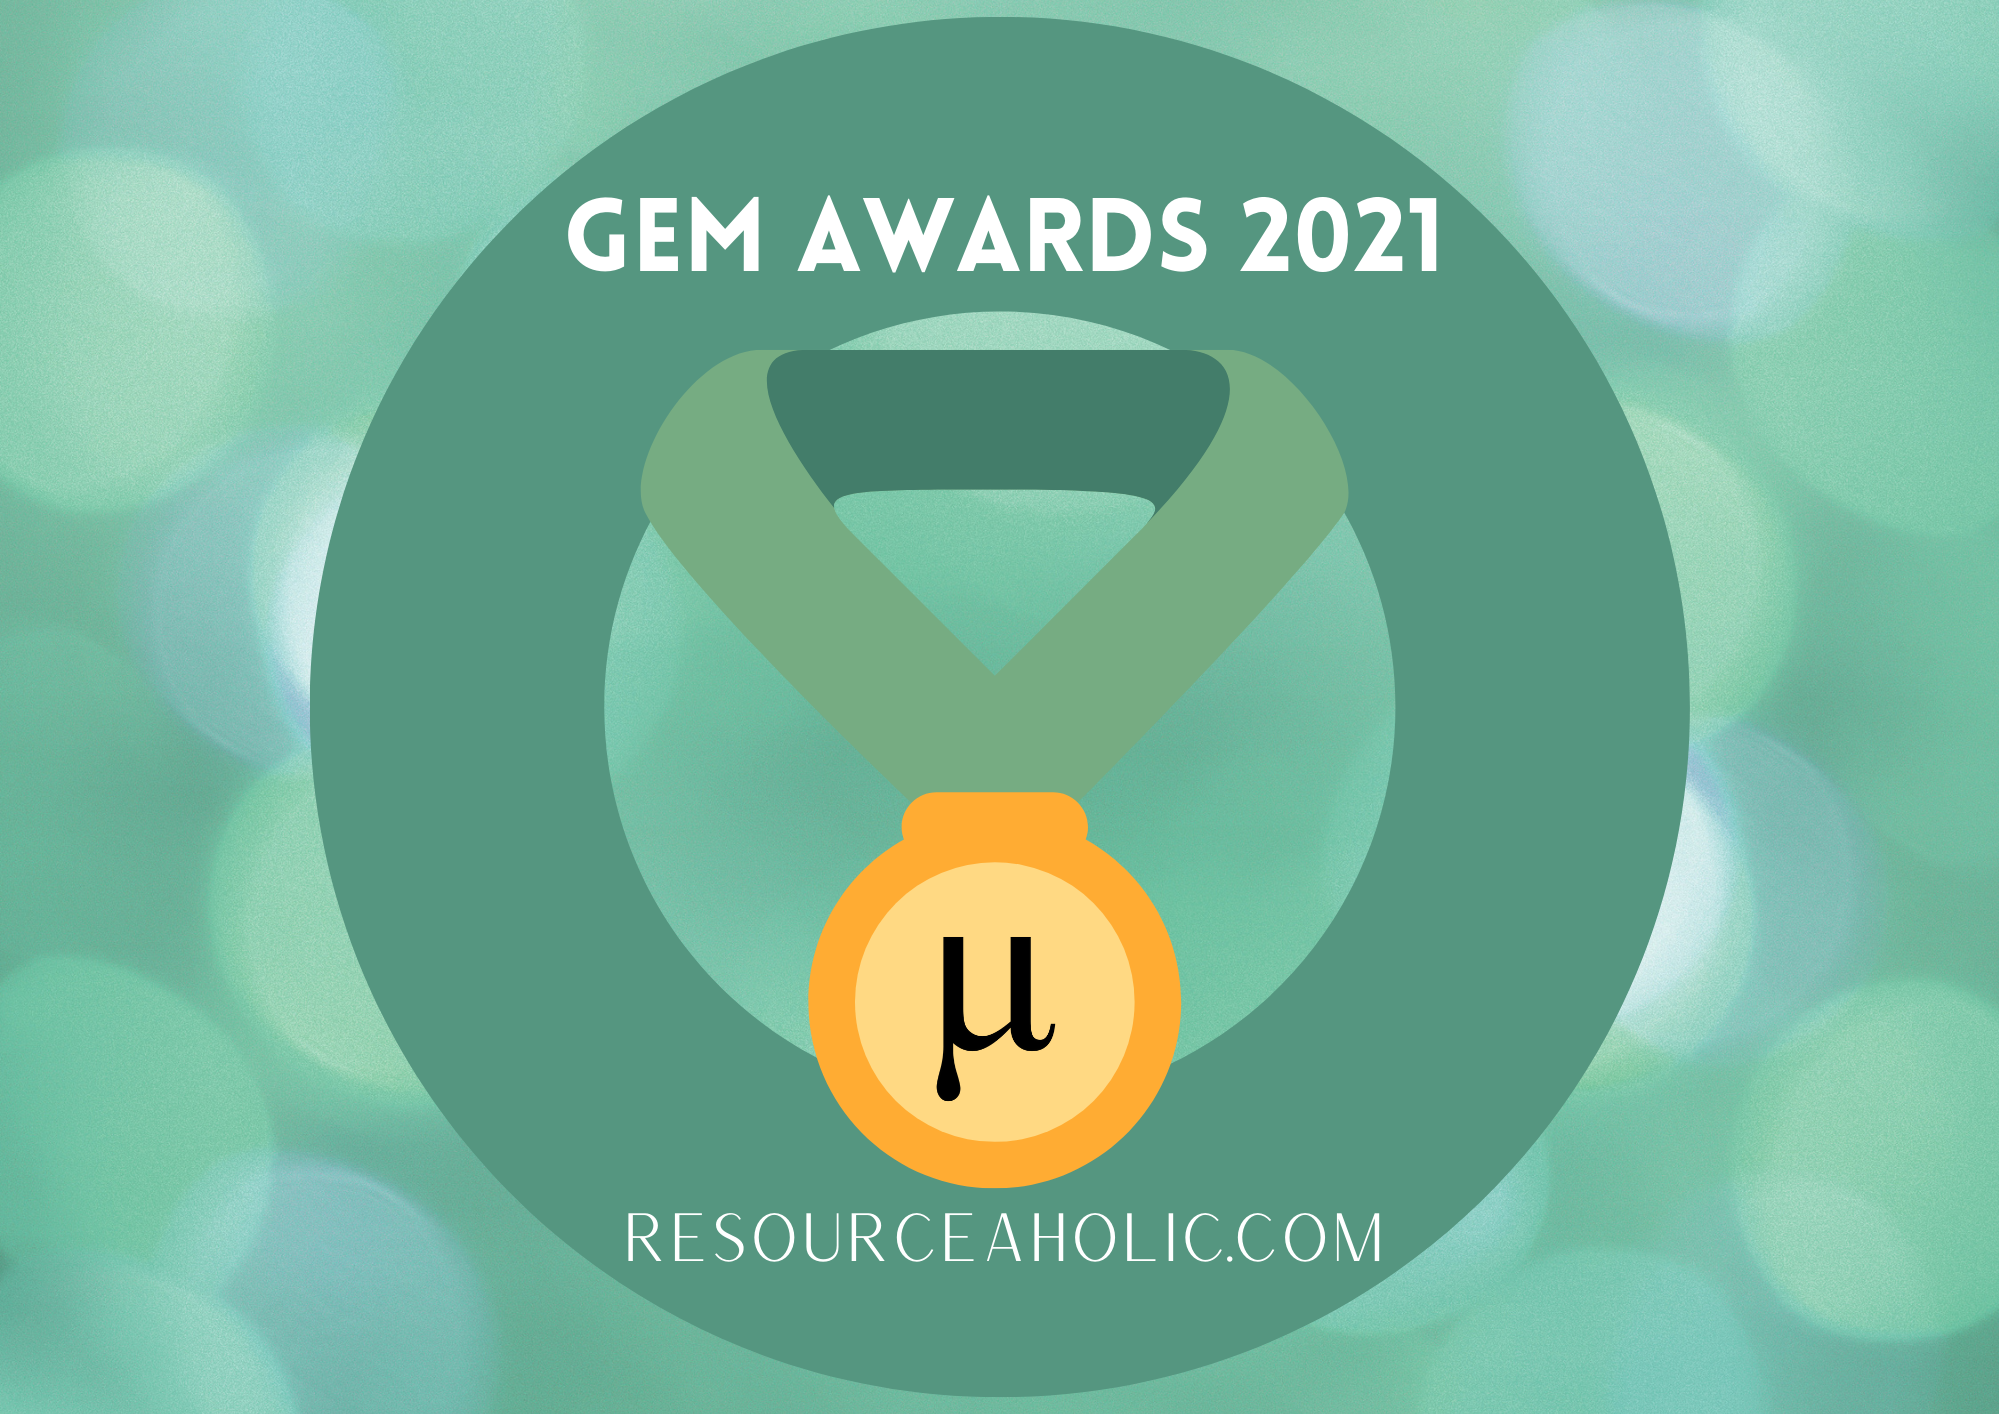 Resourceaholic: Gem Awards 2021